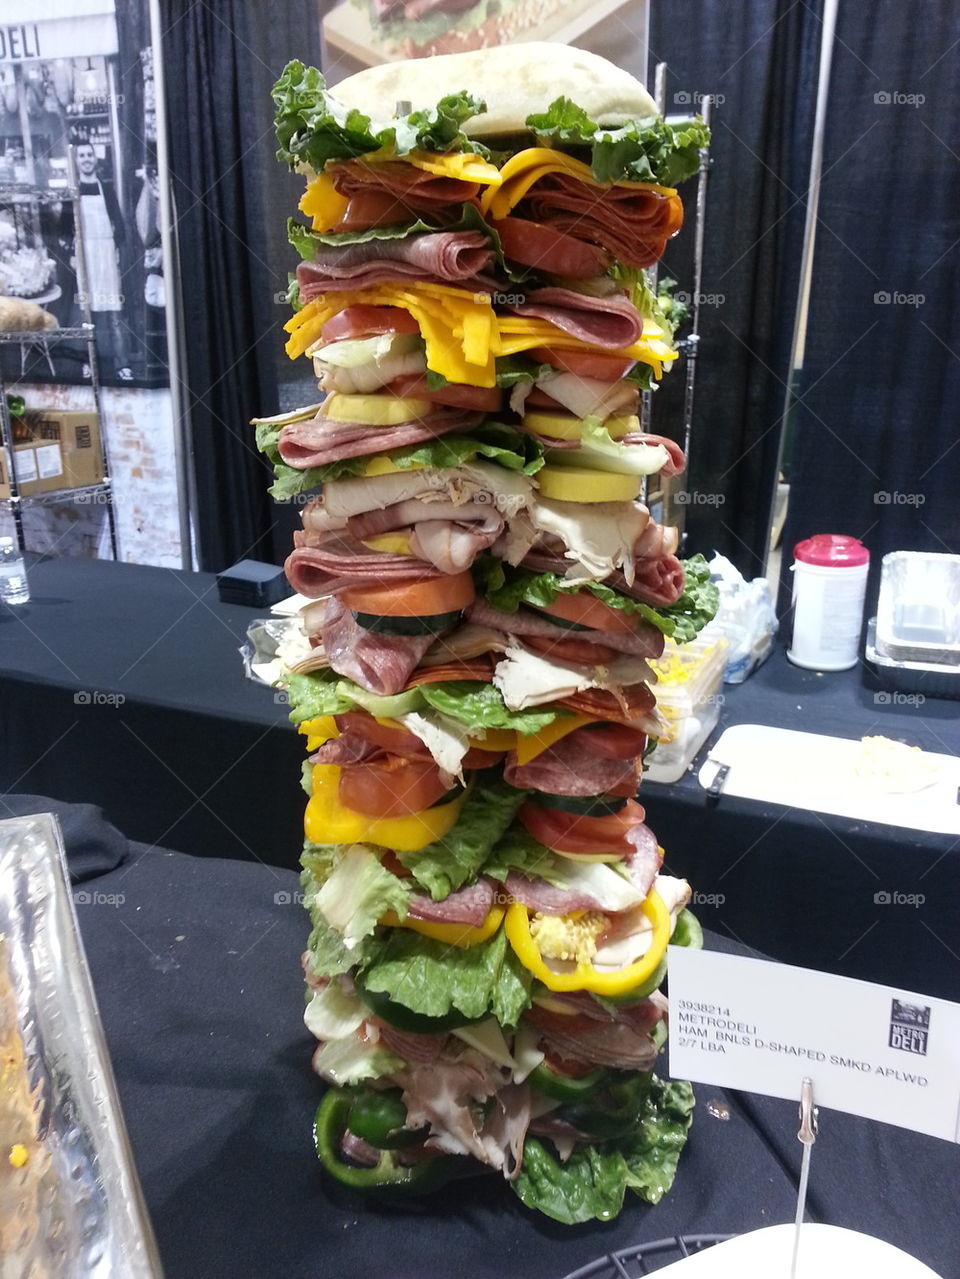 massive sandwich